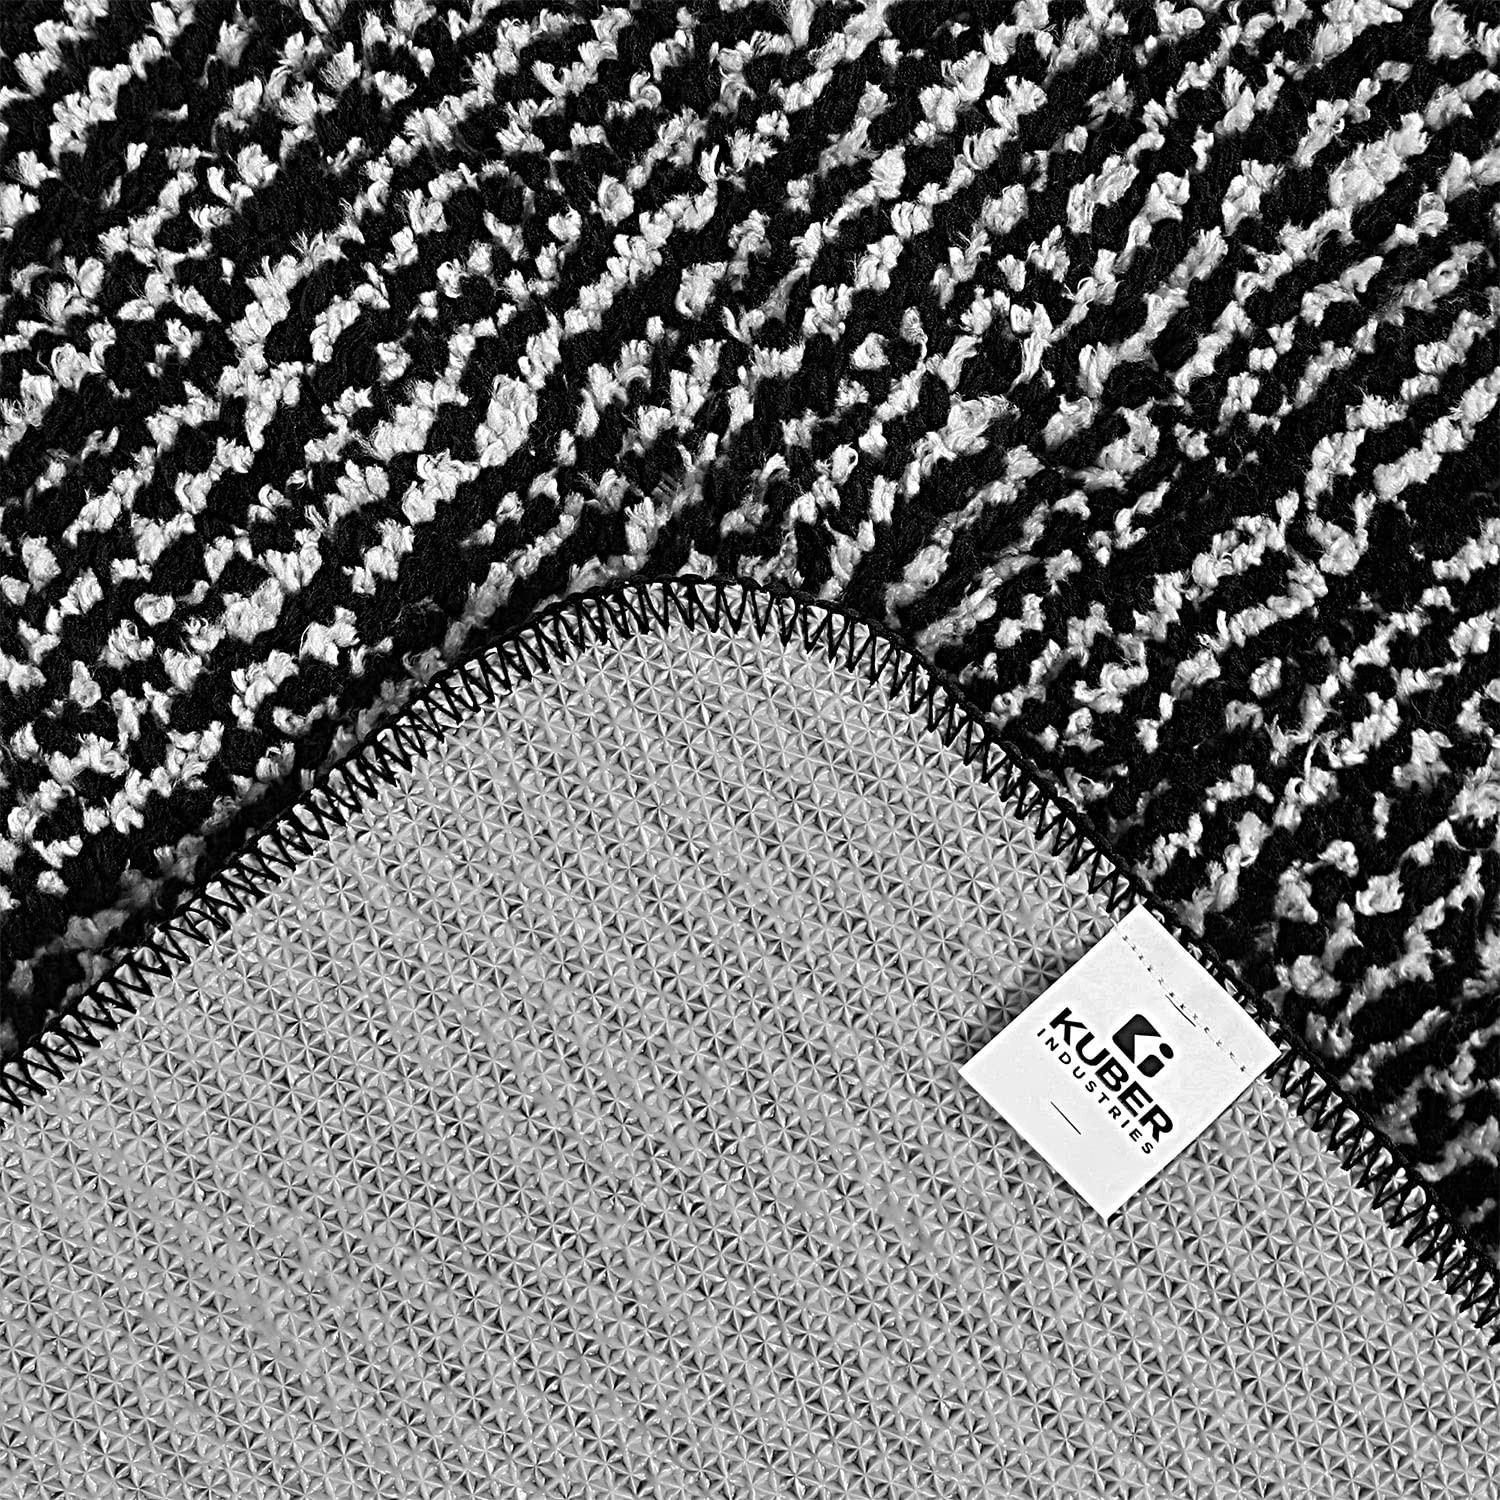 Kuber Industries Door mat | Microfiber Water Absorbant Floor Mat | Bold Stripes Pattern Entrance Mat for Kitchen, Bedside, Door, Living Room,60x40 cm, Pack of 2 (Black)